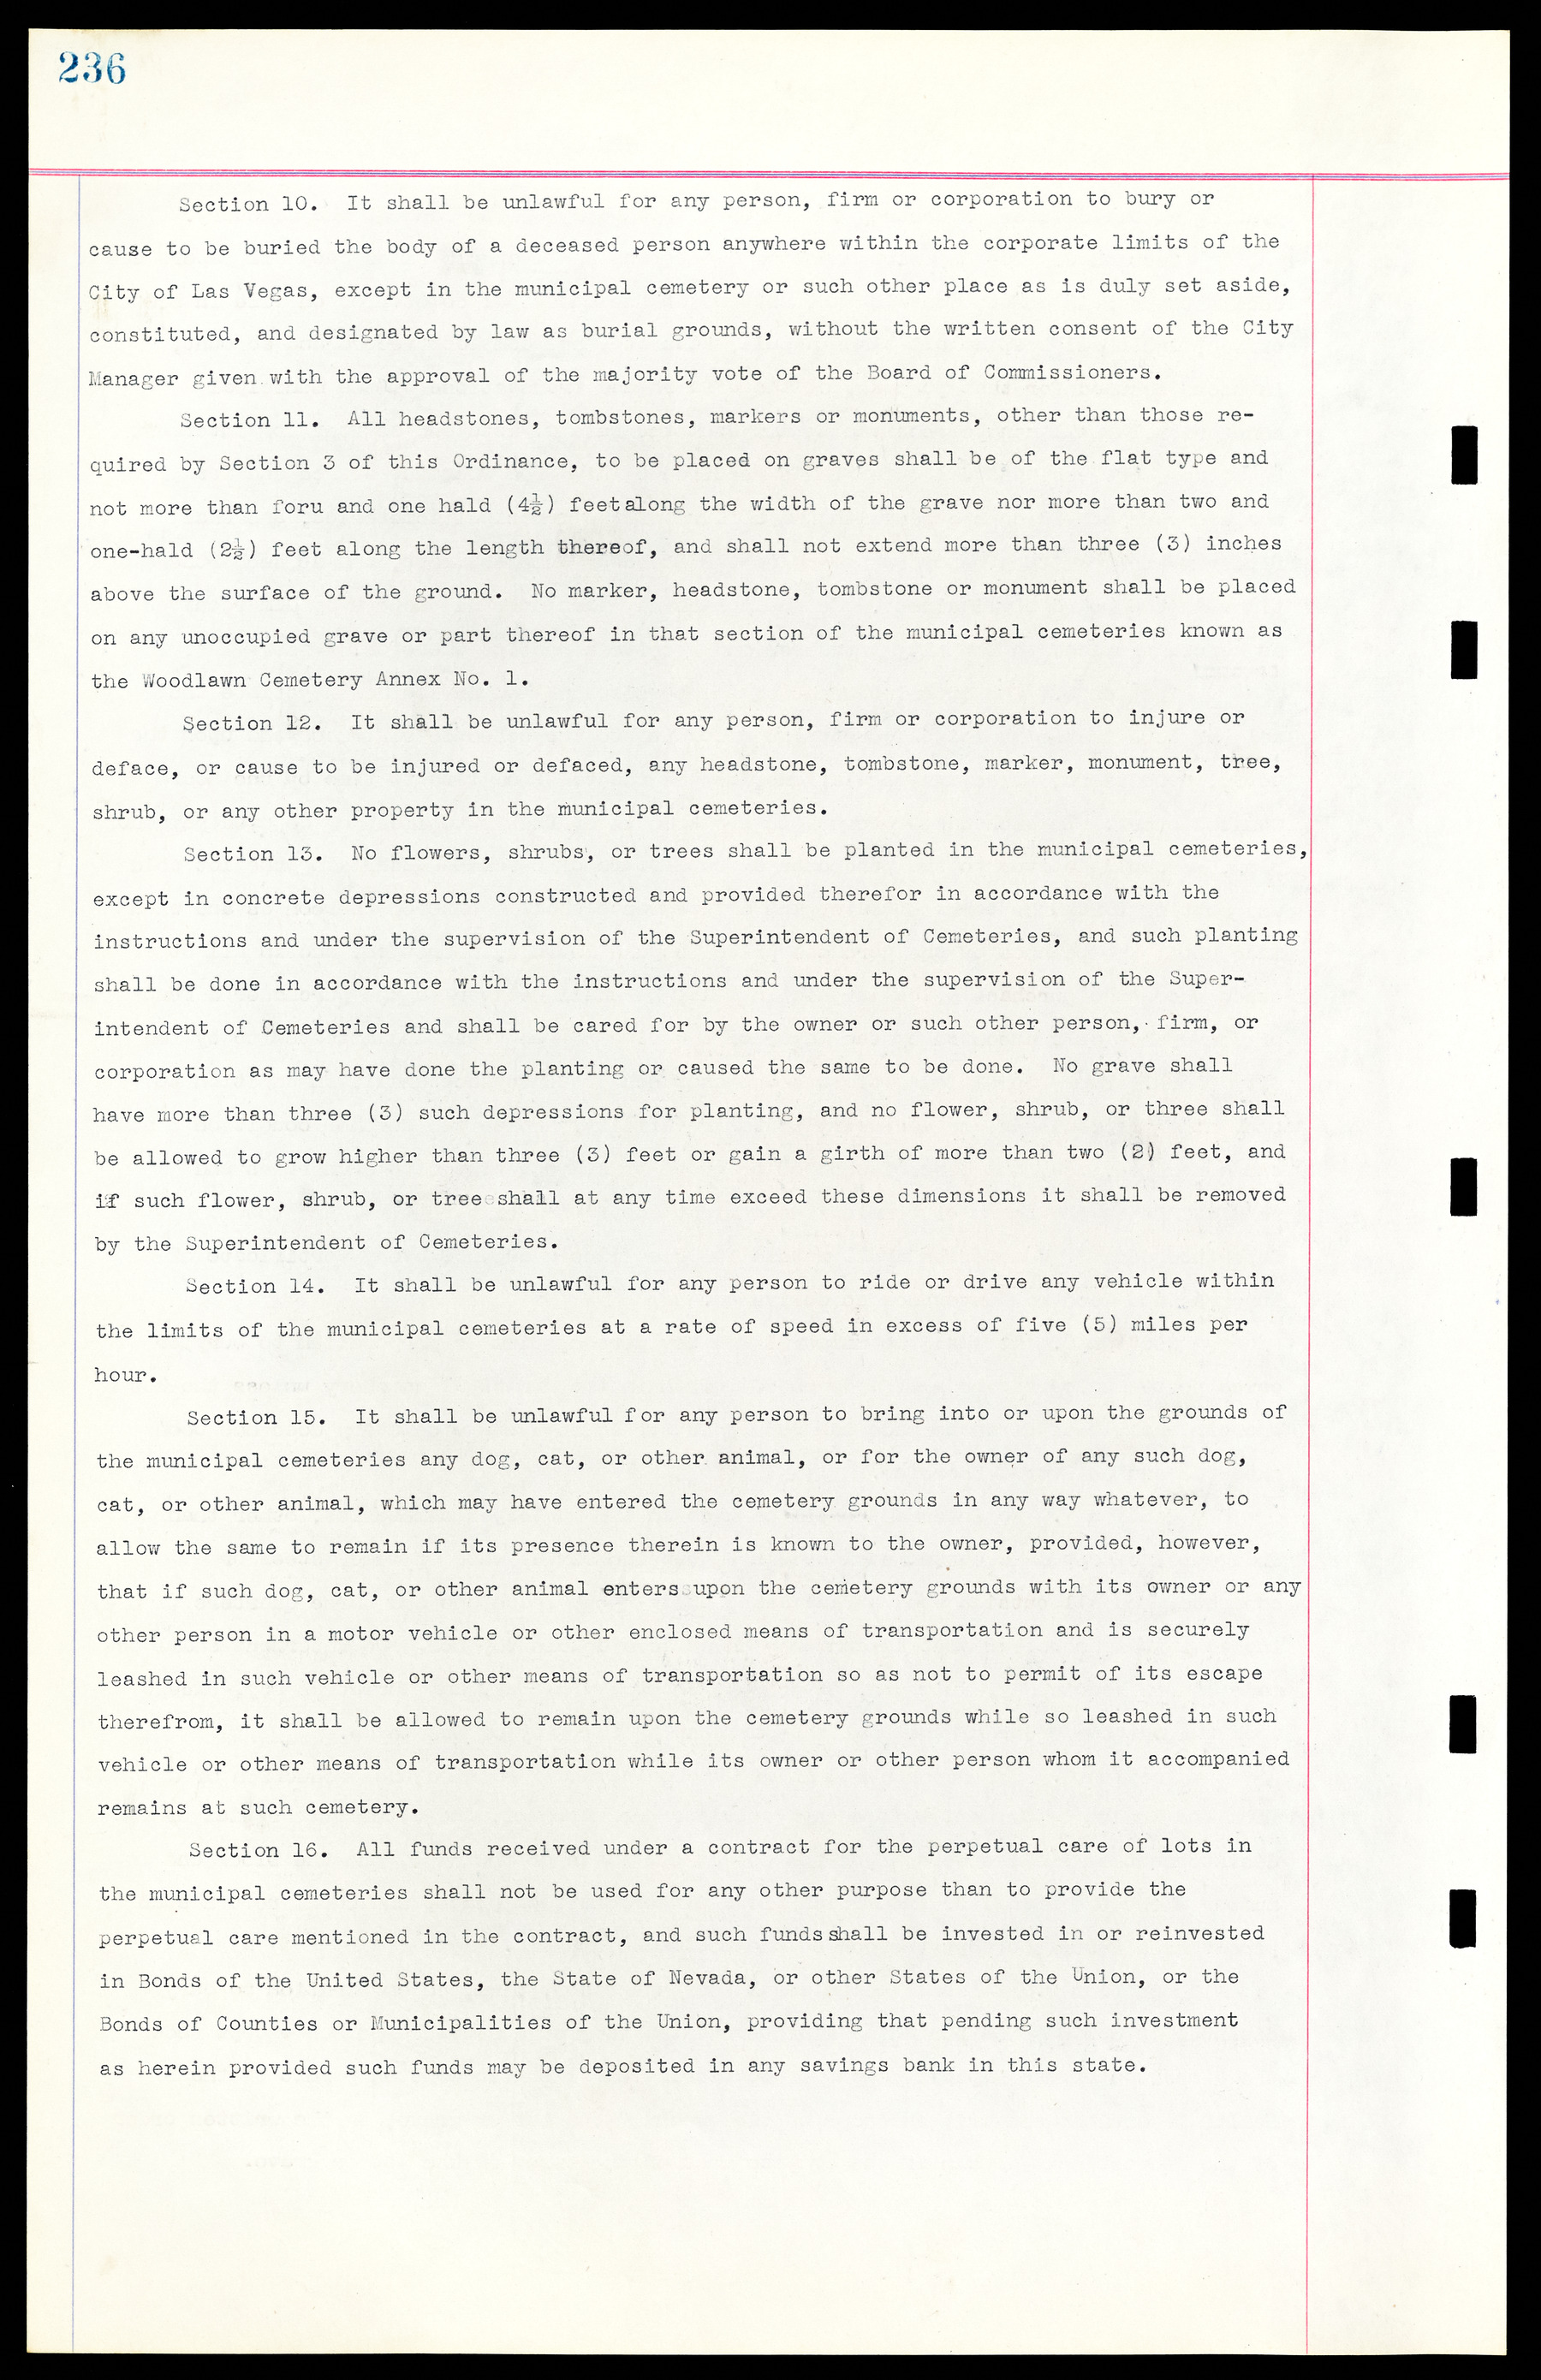 Las Vegas City Ordinances, March 31, 1933 to October 25, 1950, lvc000014-265